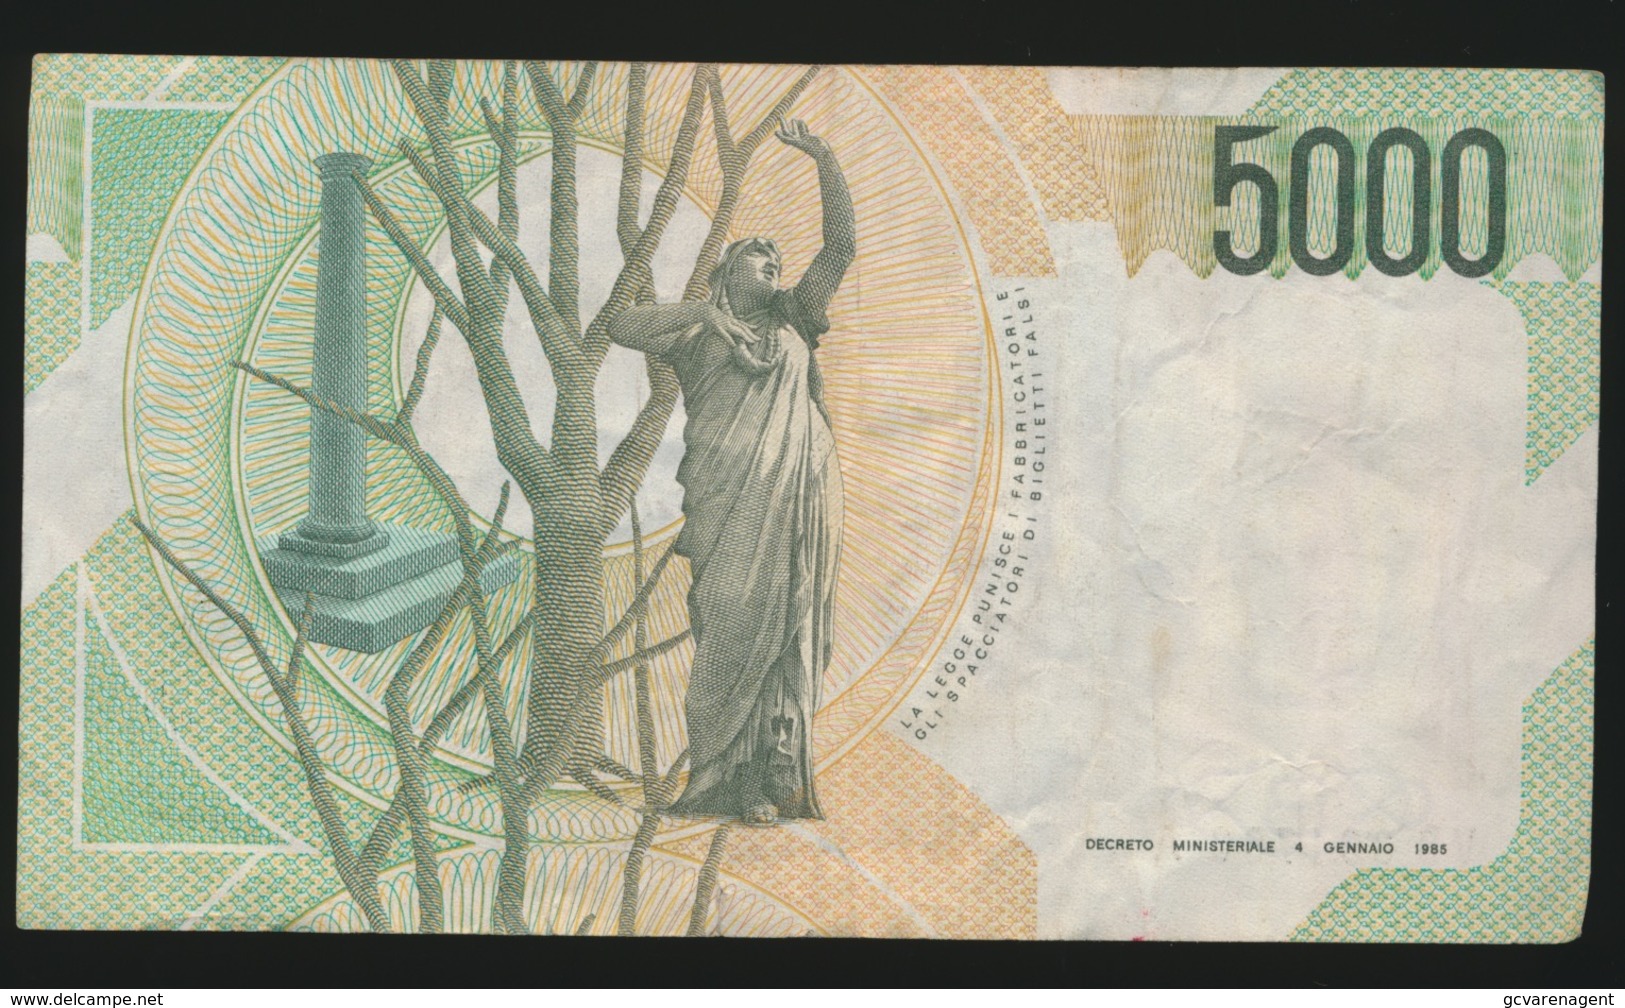 5000 LIRE - 5.000 Lire